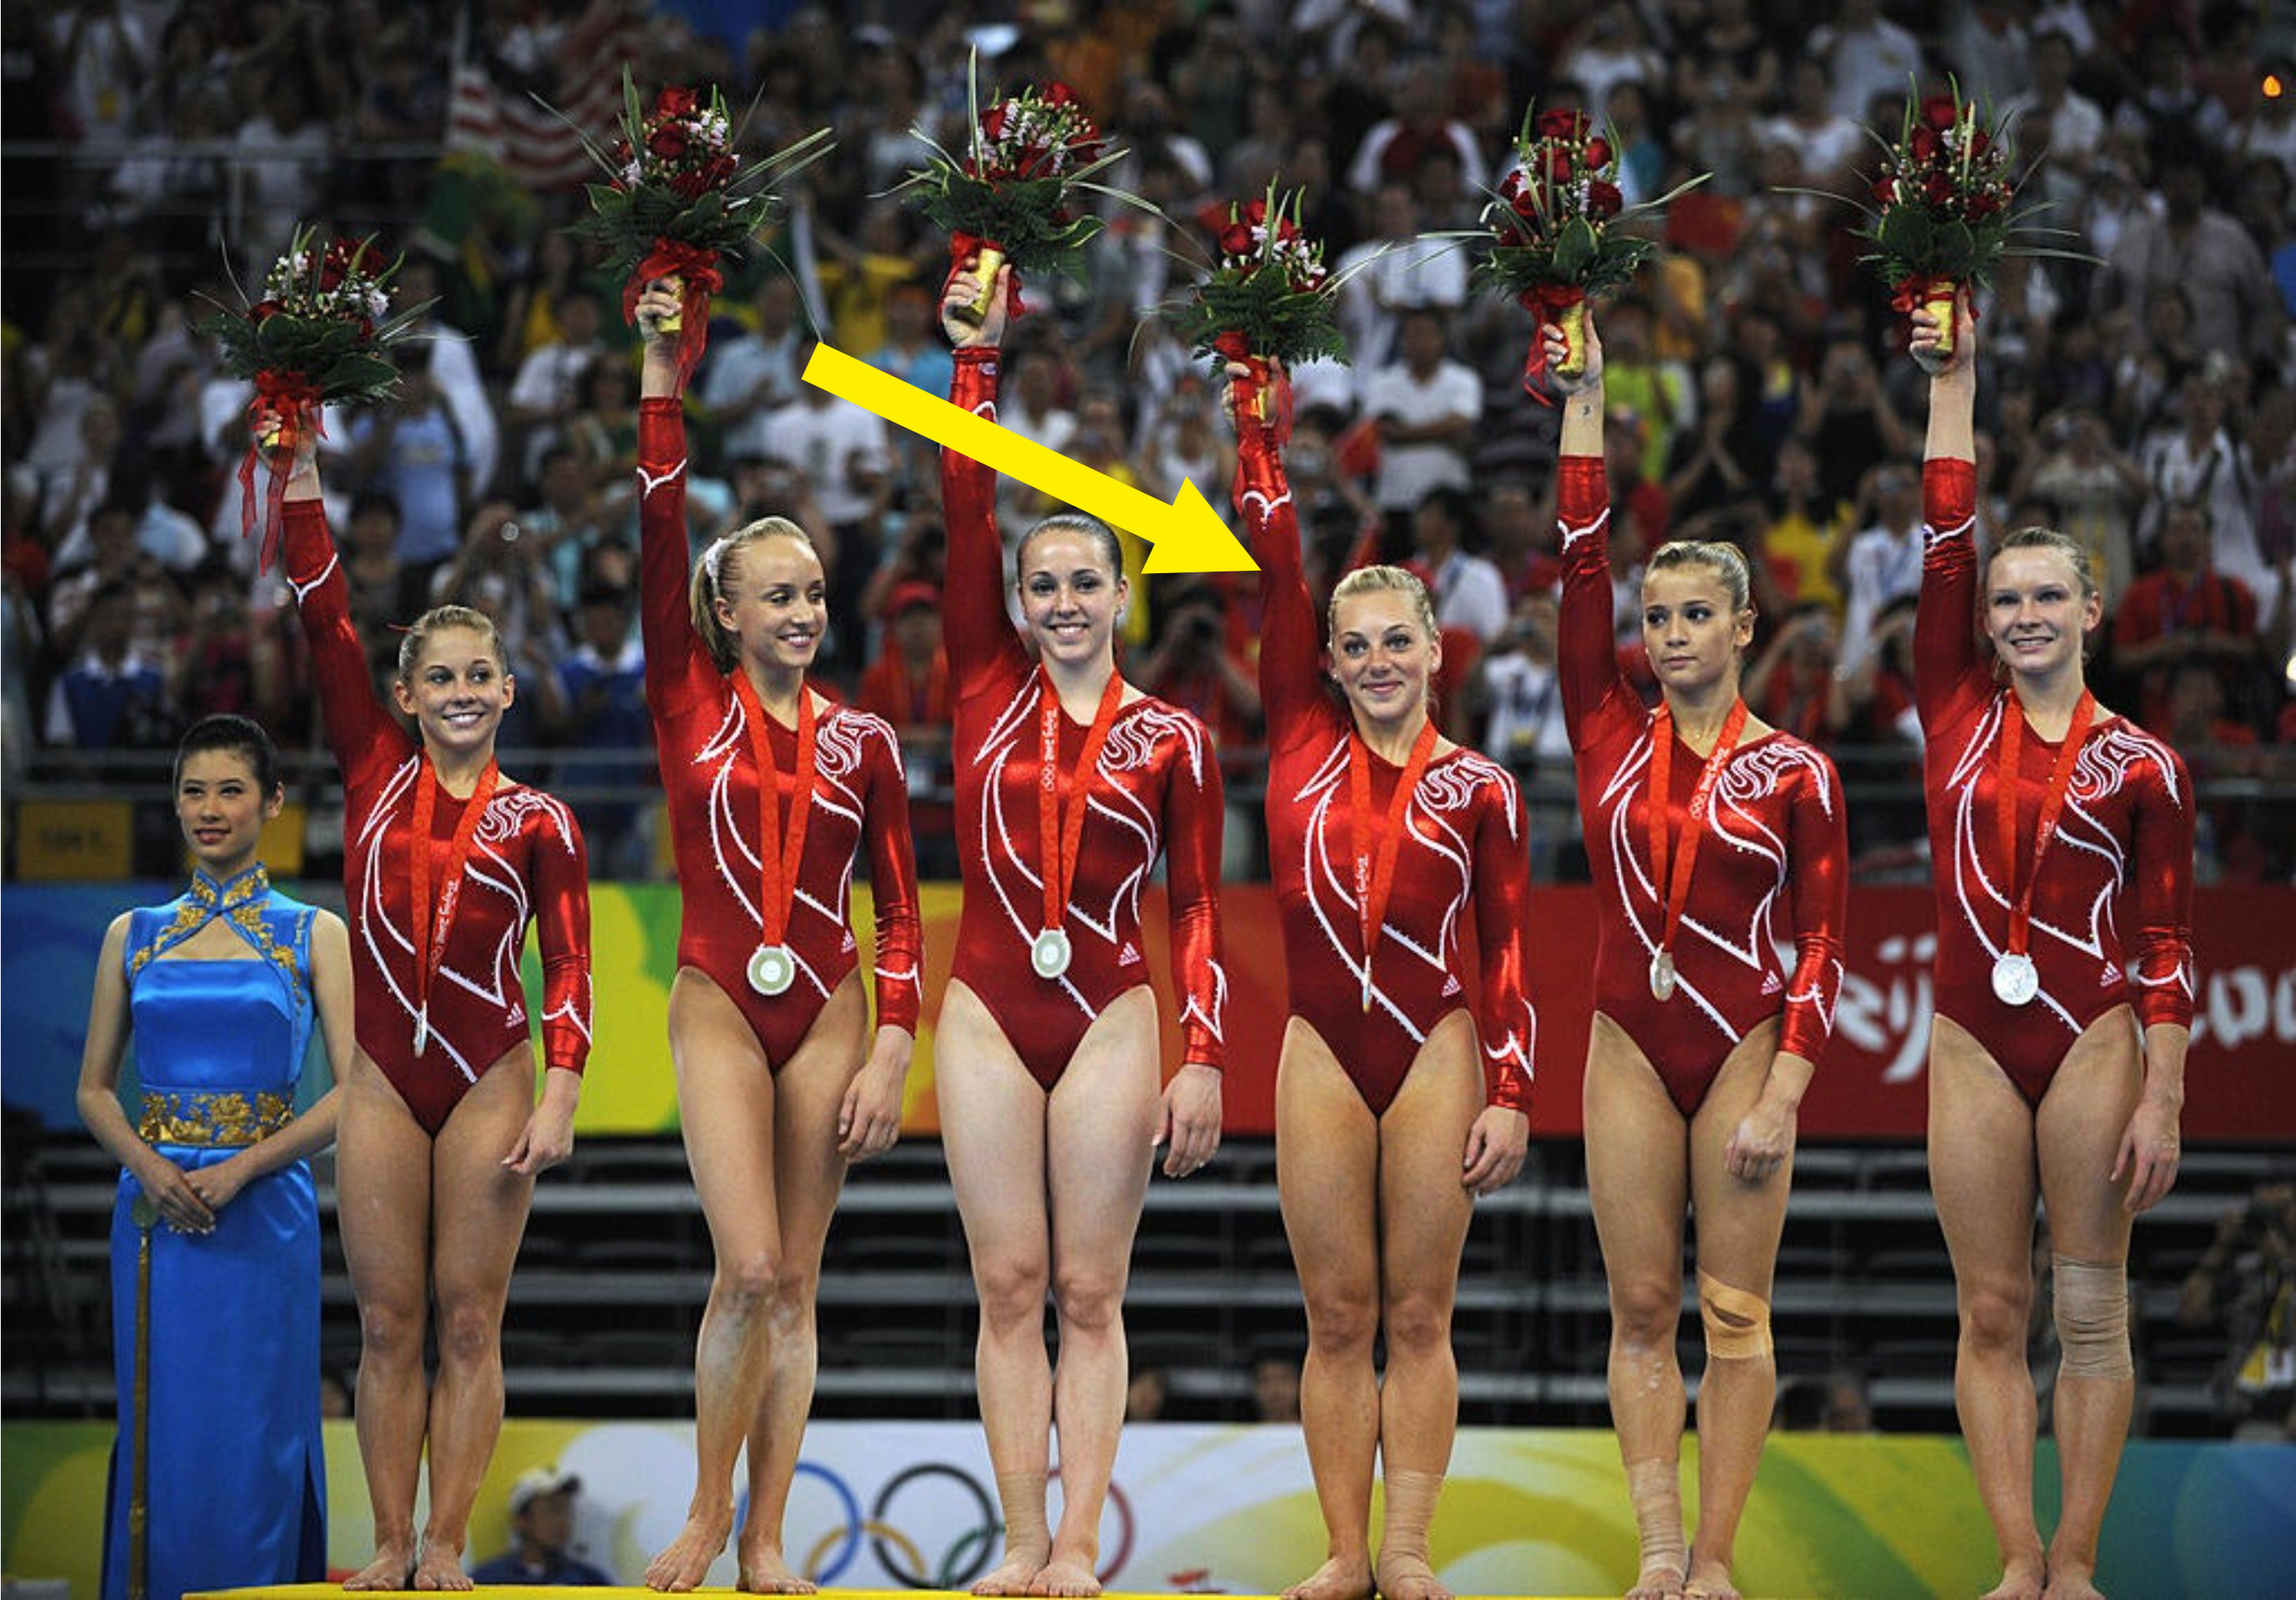 Samantha saluting spectators alongside her teammates during the medal ceremony